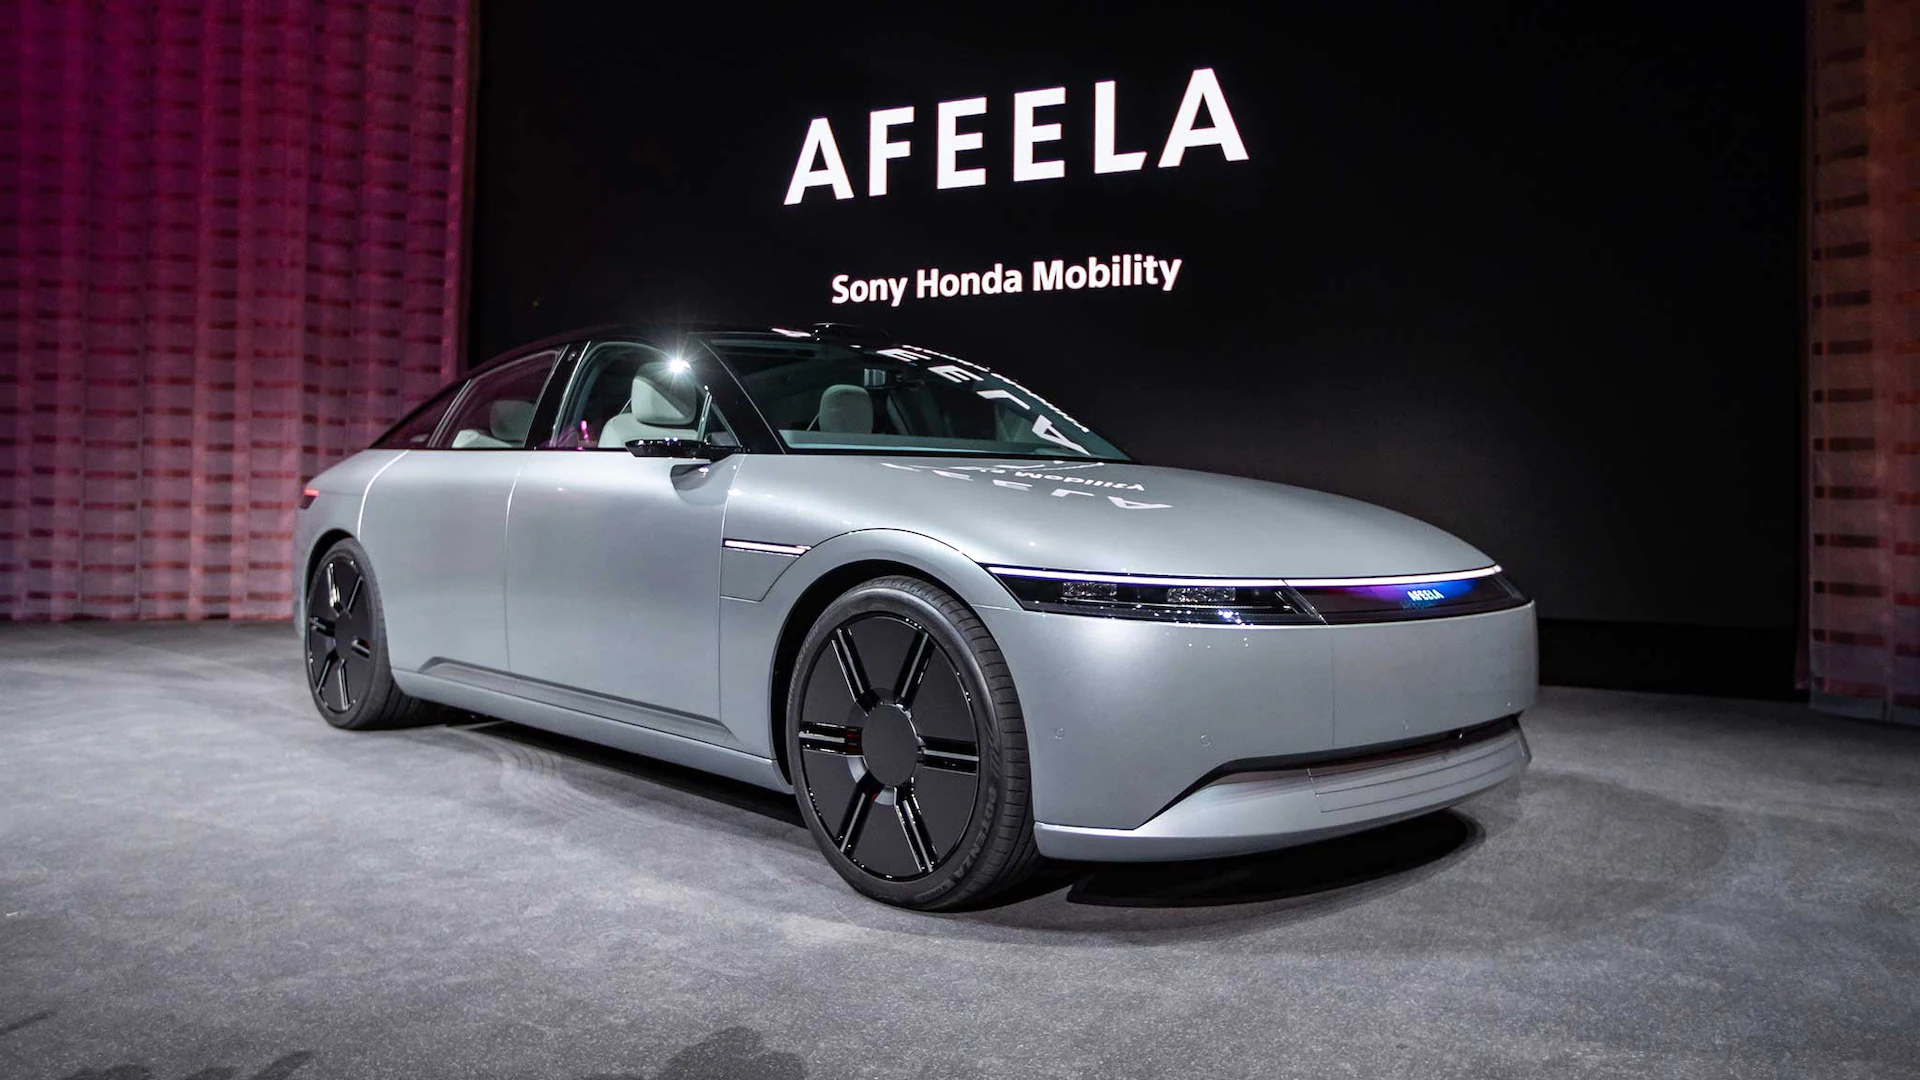 CES 2023 ပွဲ၏ Sony ရဲ့ တင်ဆက်မှု အစီအစဥ်မှာ Afeela လို့ နာမည်ပေးထားတဲ့ လျှပ်စစ်ကားကို Sony Honda Mobility ၏ CEO Yasuhide Mizuno က မိတ်ဆက်ပေးခဲ့ပါတယ်။